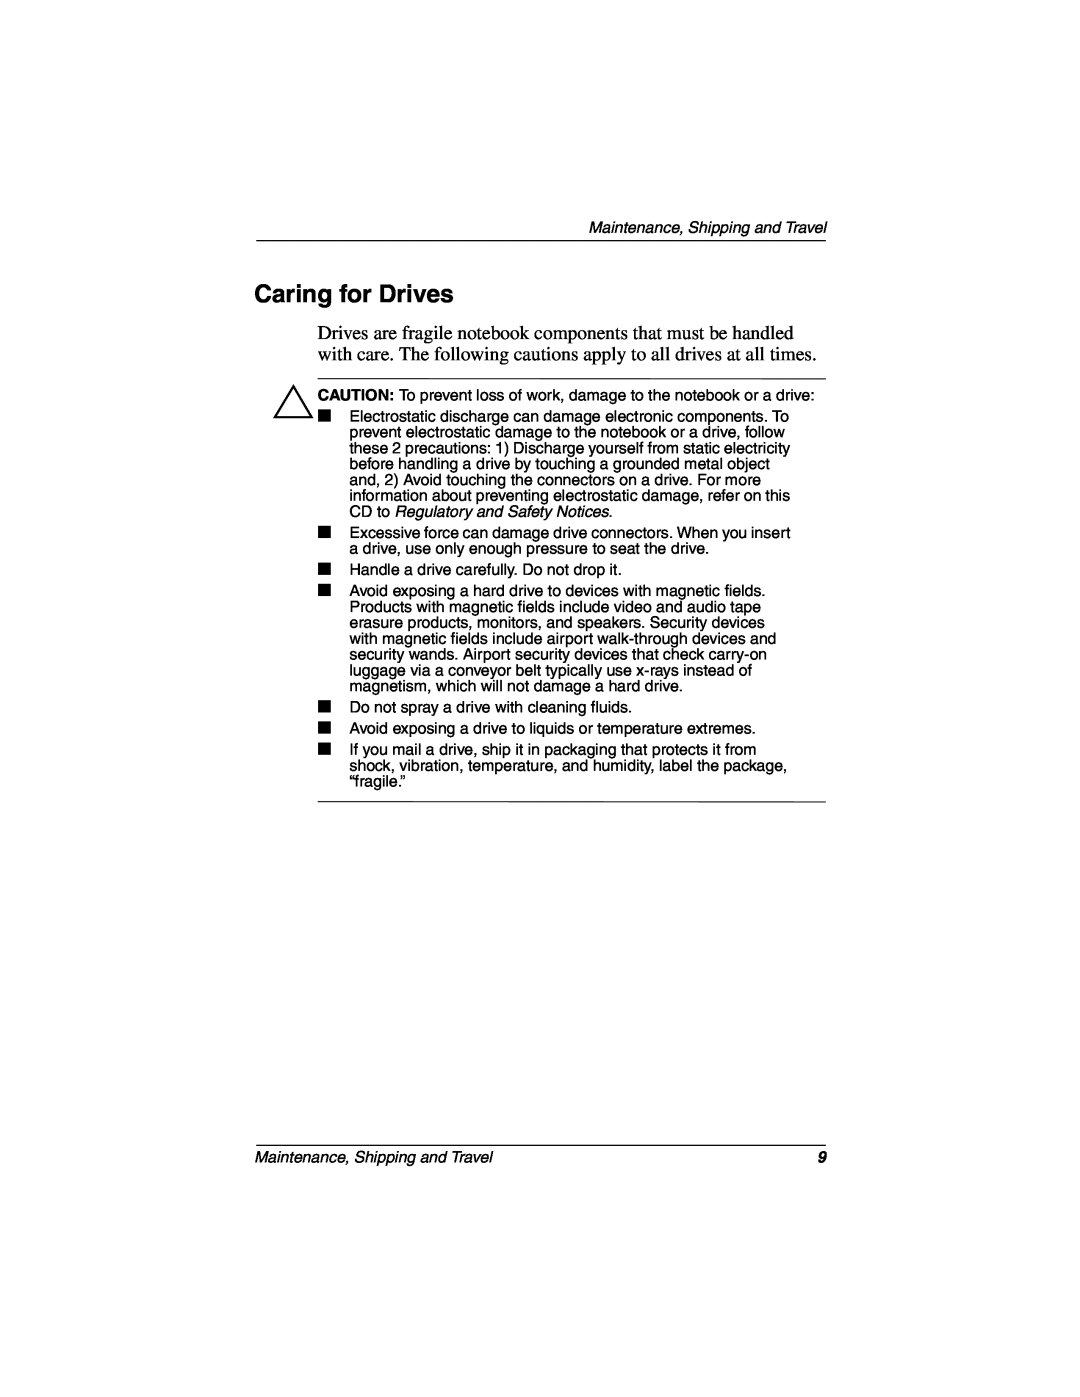 Compaq 267637-001 manual Caring for Drives, Maintenance, Shipping and Travel 